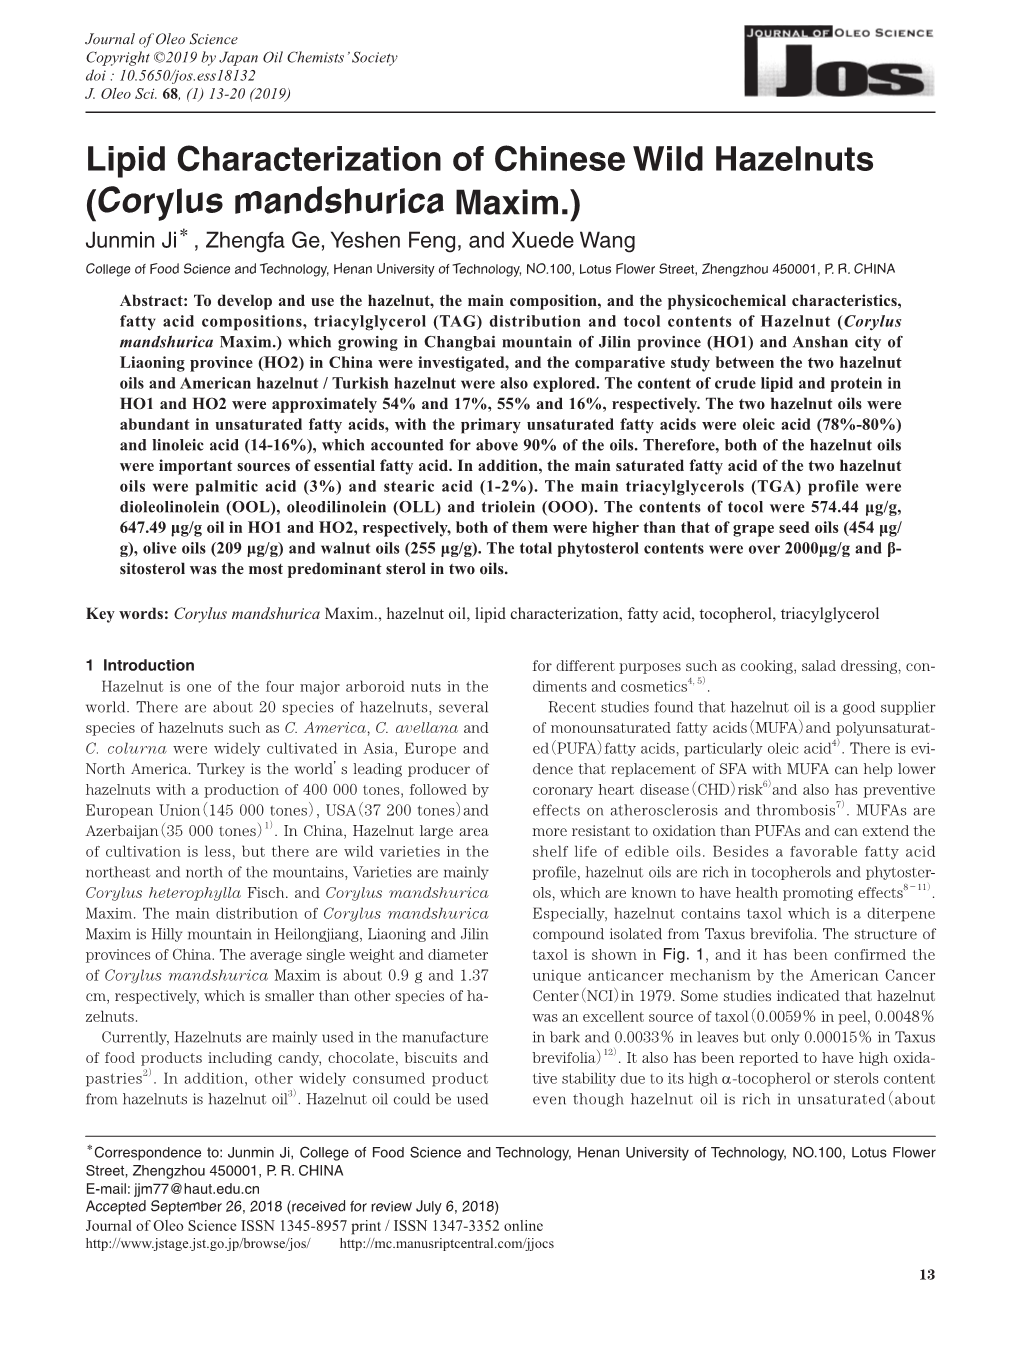 Lipid Characterization of Chinese Wild Hazelnuts (Corylus Mandshurica